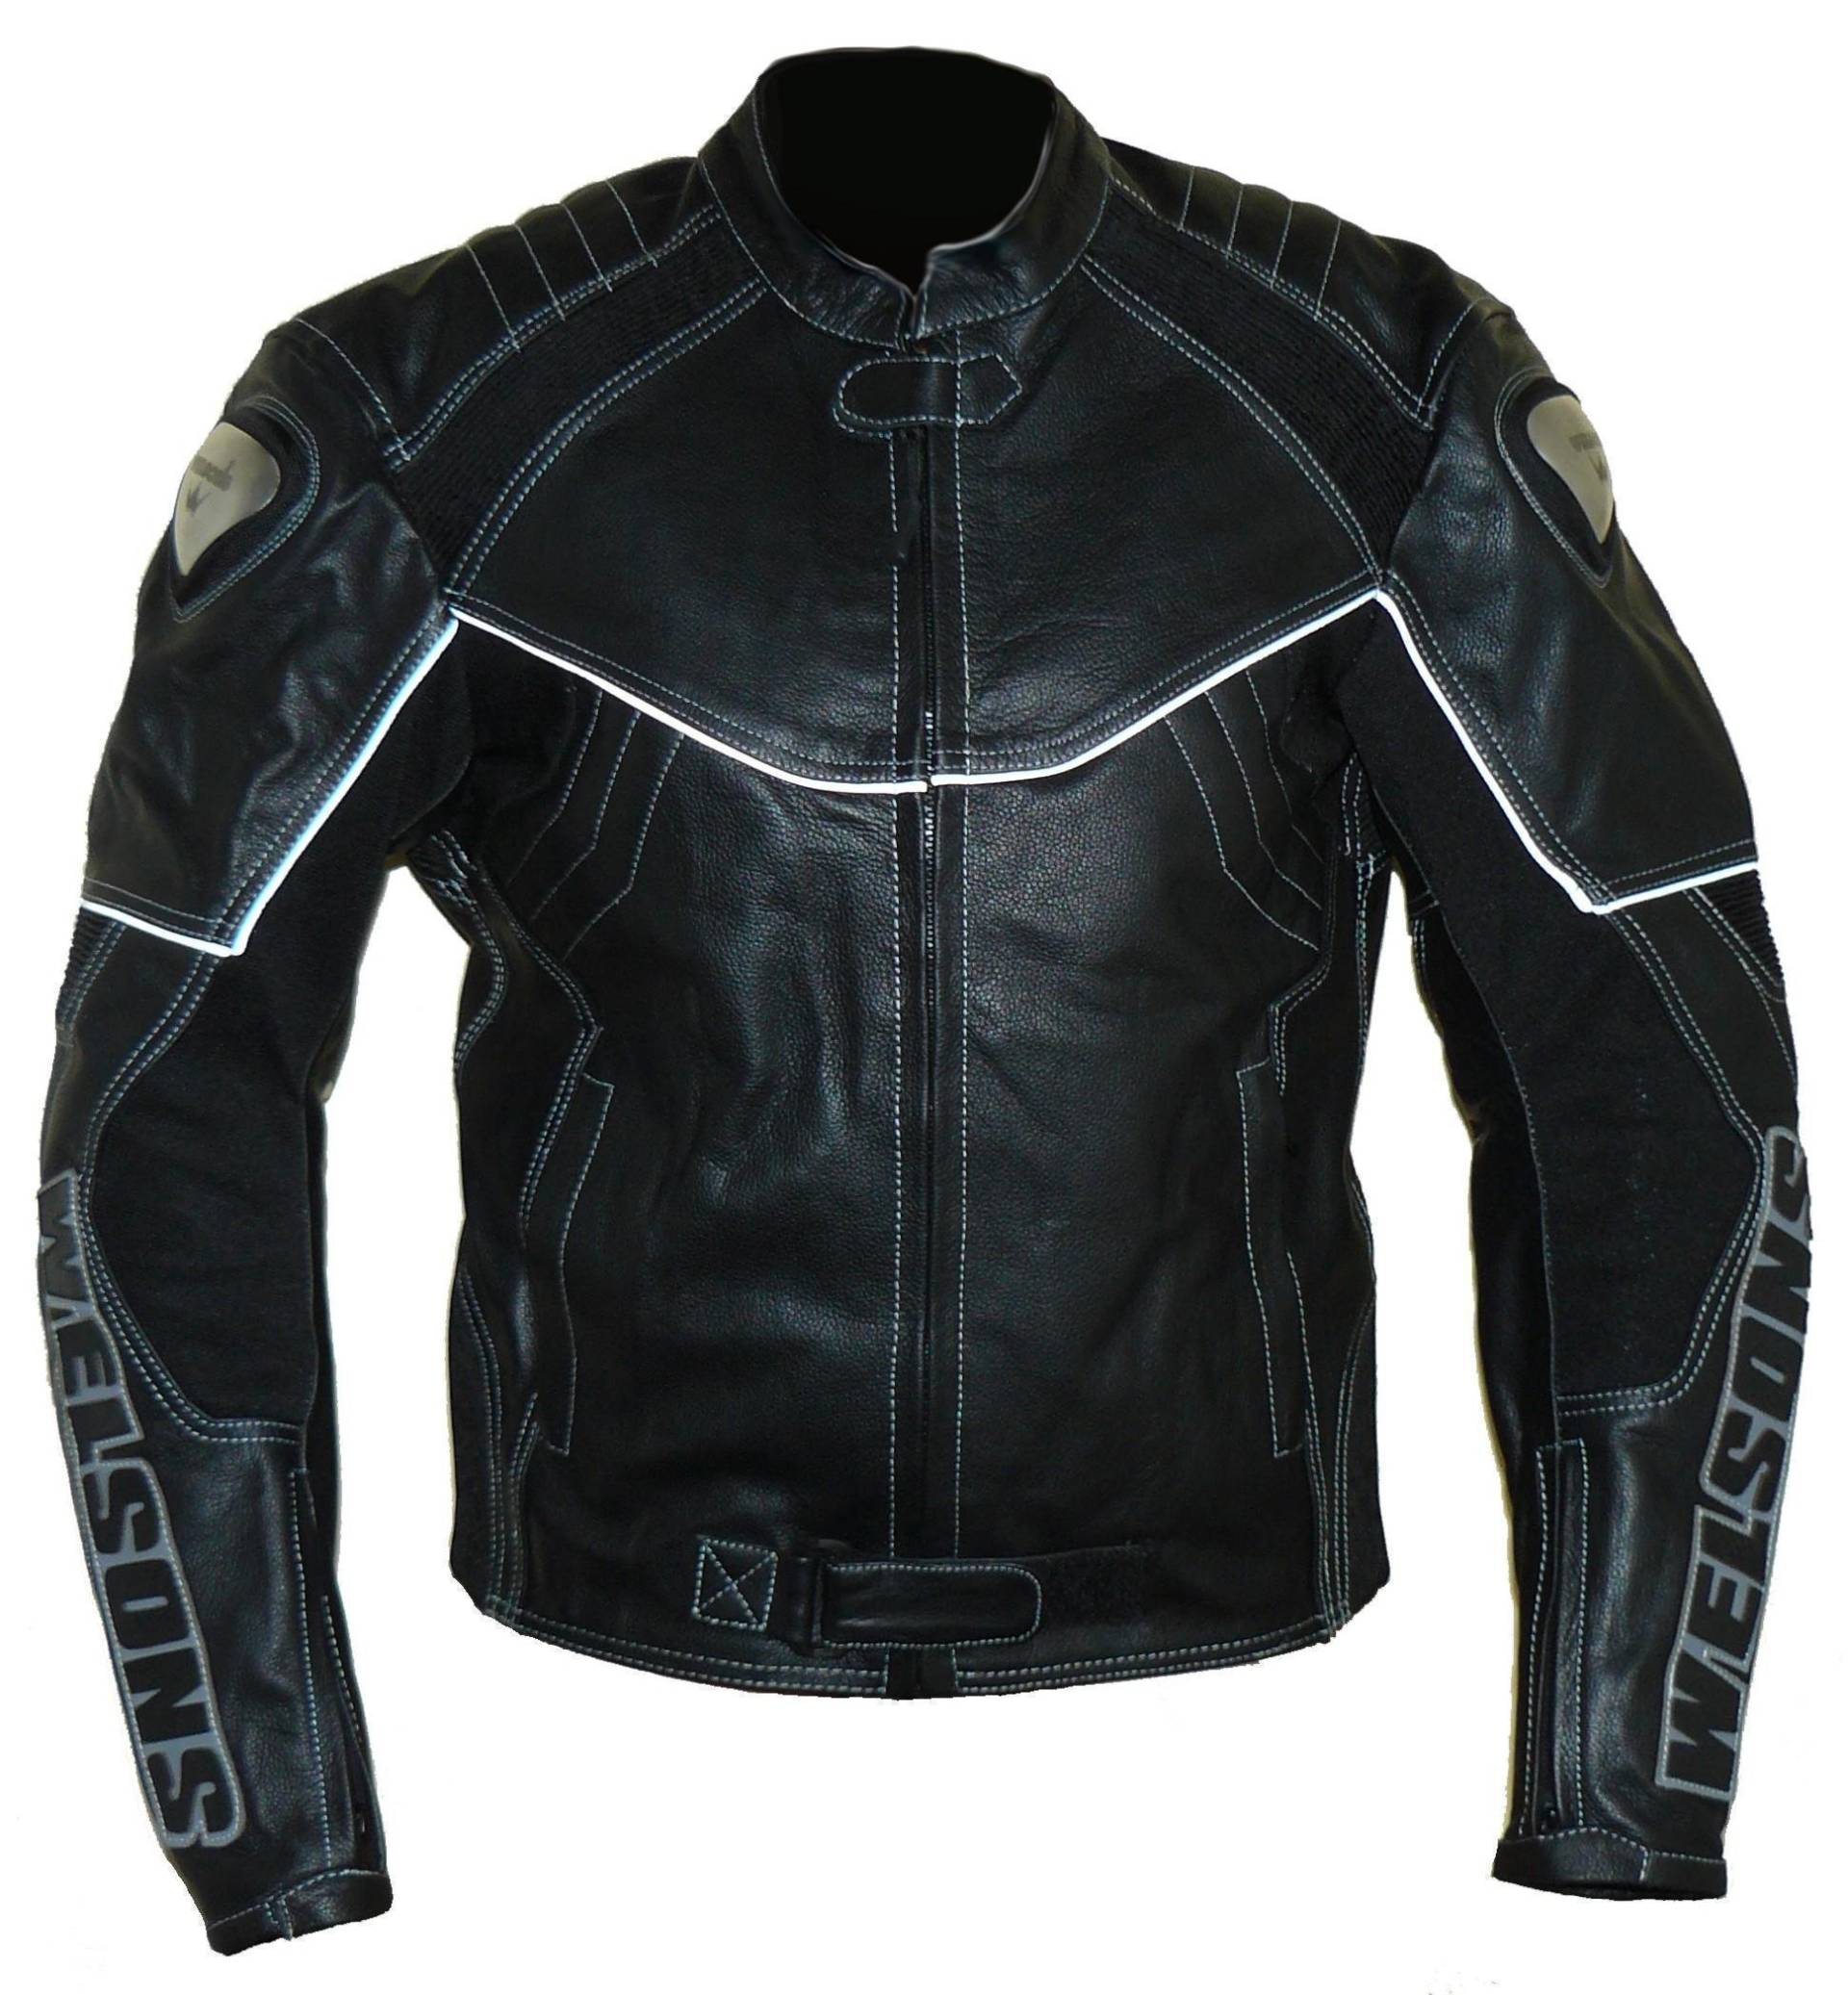 Protectwear WMB-303 Motorrad - Lederjacke, Größe : 50, schwarz von protectWEAR